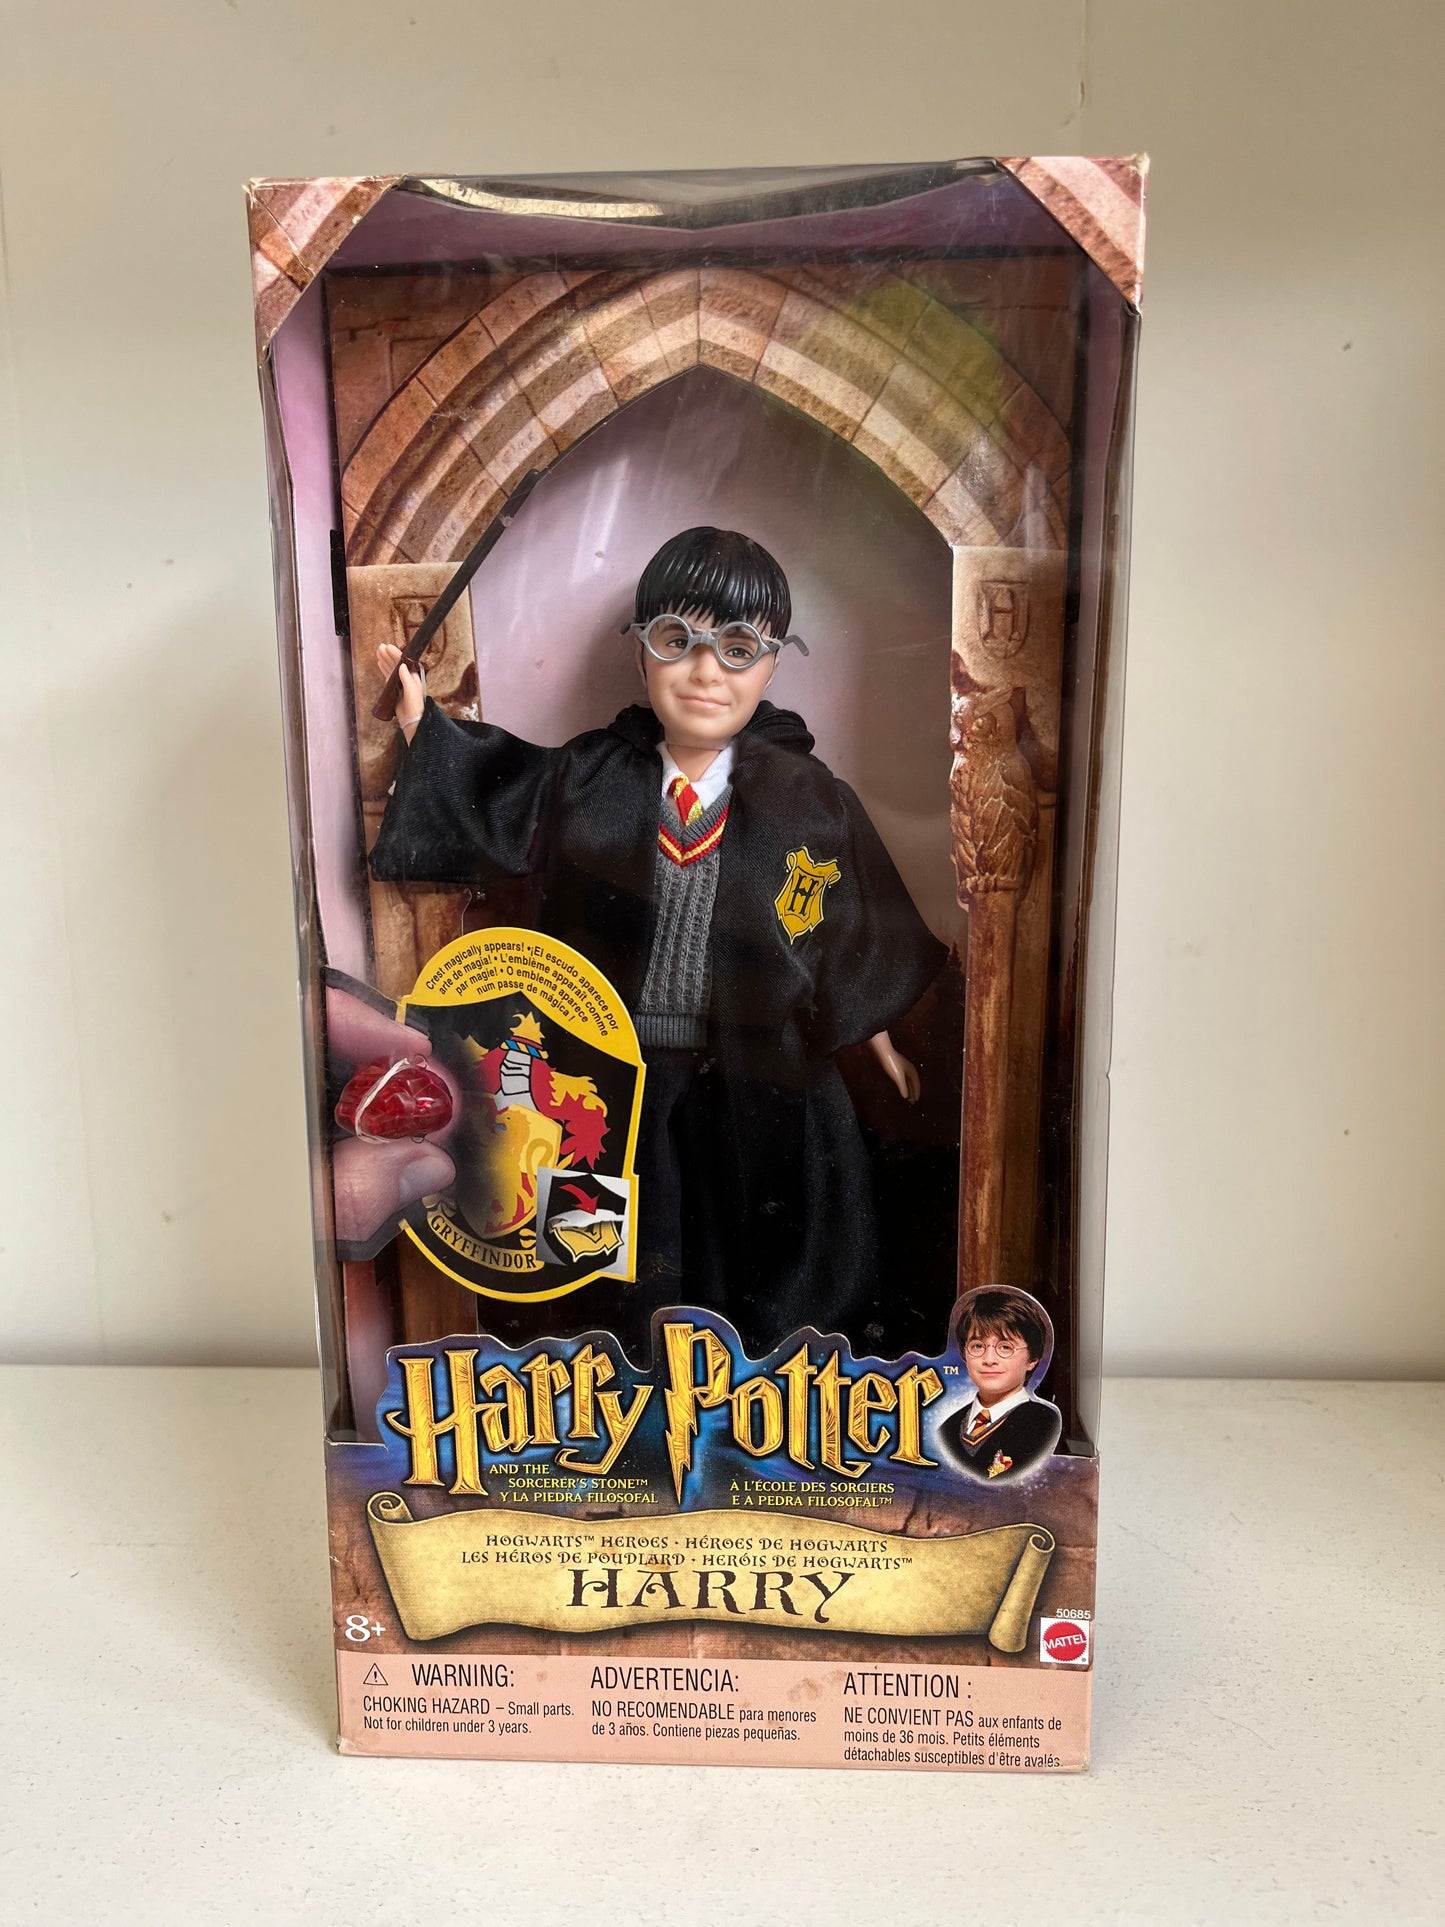 Hogwarts Heroes Harry Potter doll